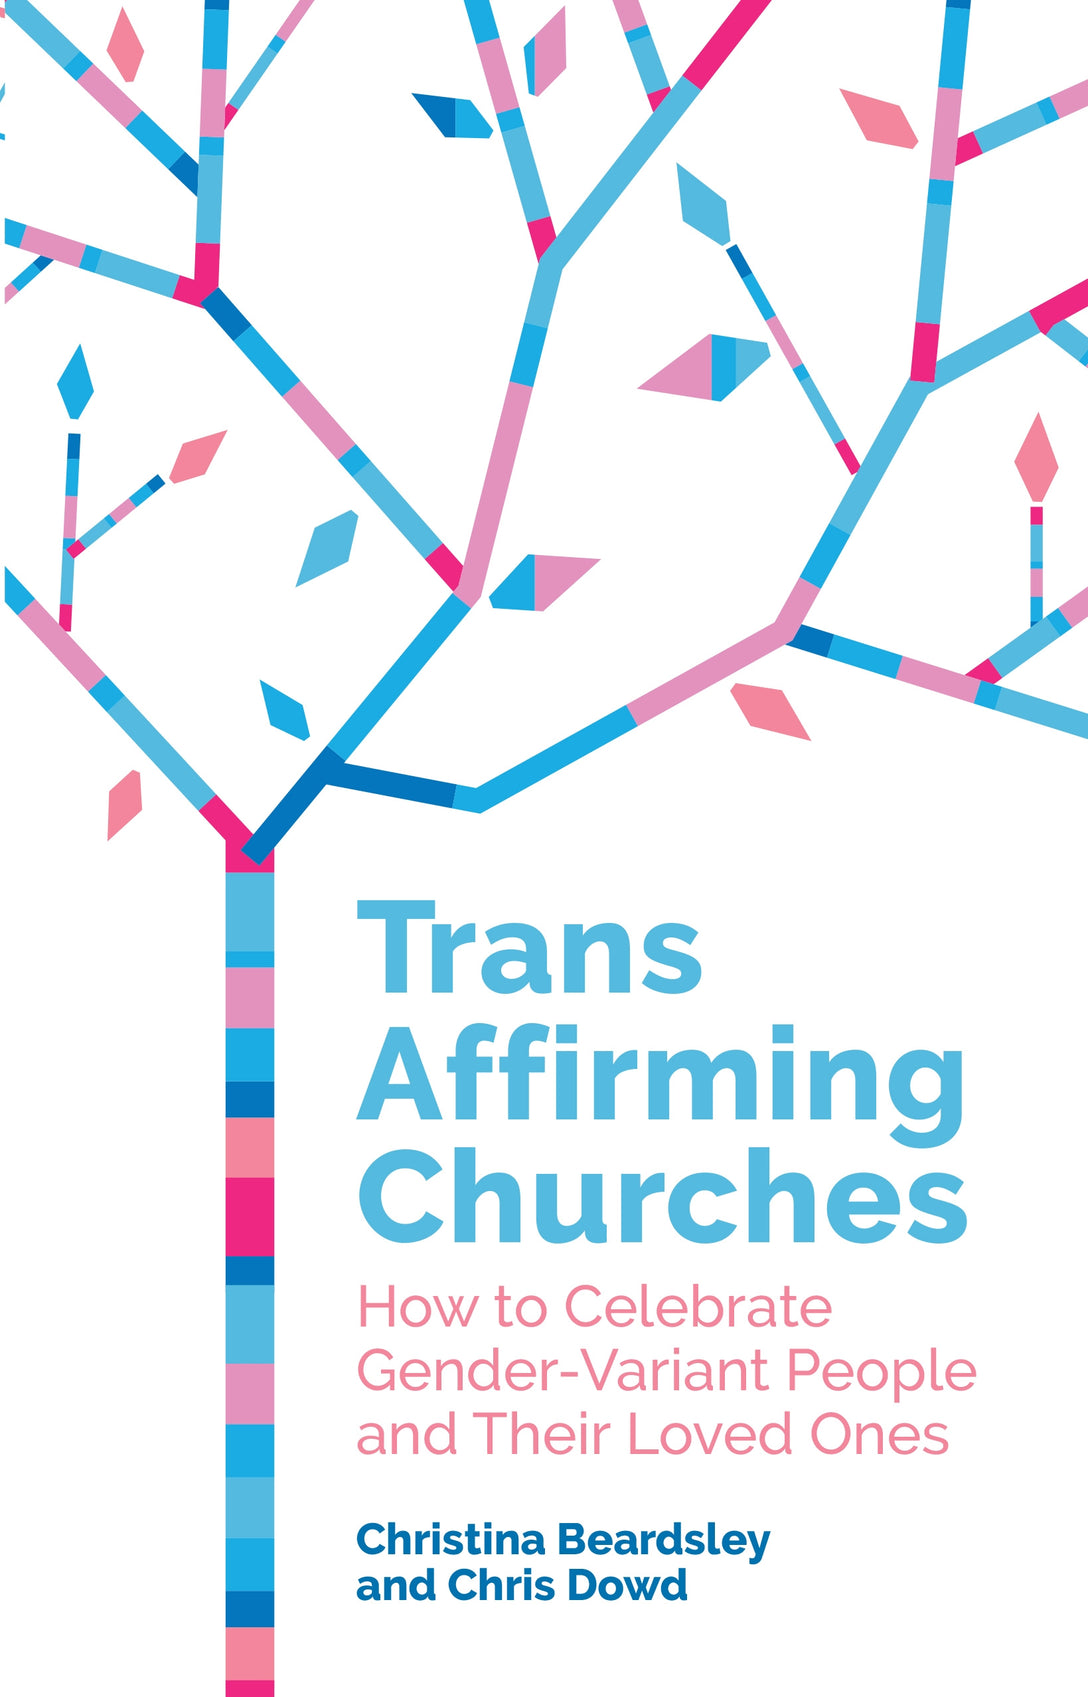 Trans Affirming Churches by Chris Dowd, Christina Beardsley, Dr Susannah Cornwall